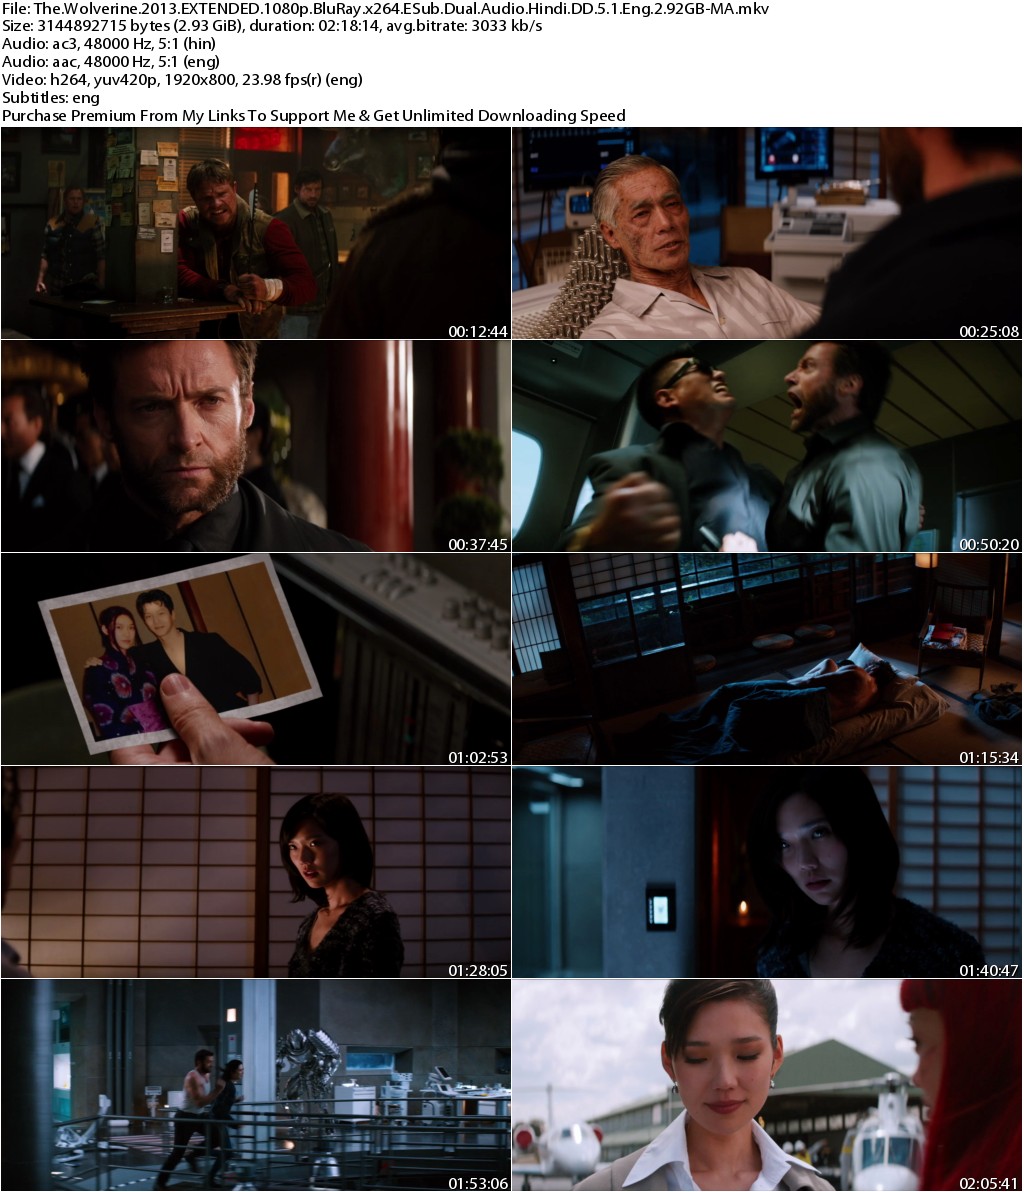 The Wolverine (2013) EXTENDED 1080p BluRay x264 ESub Dual Audio Hindi DD 5.1 Eng 2.92GB-MA